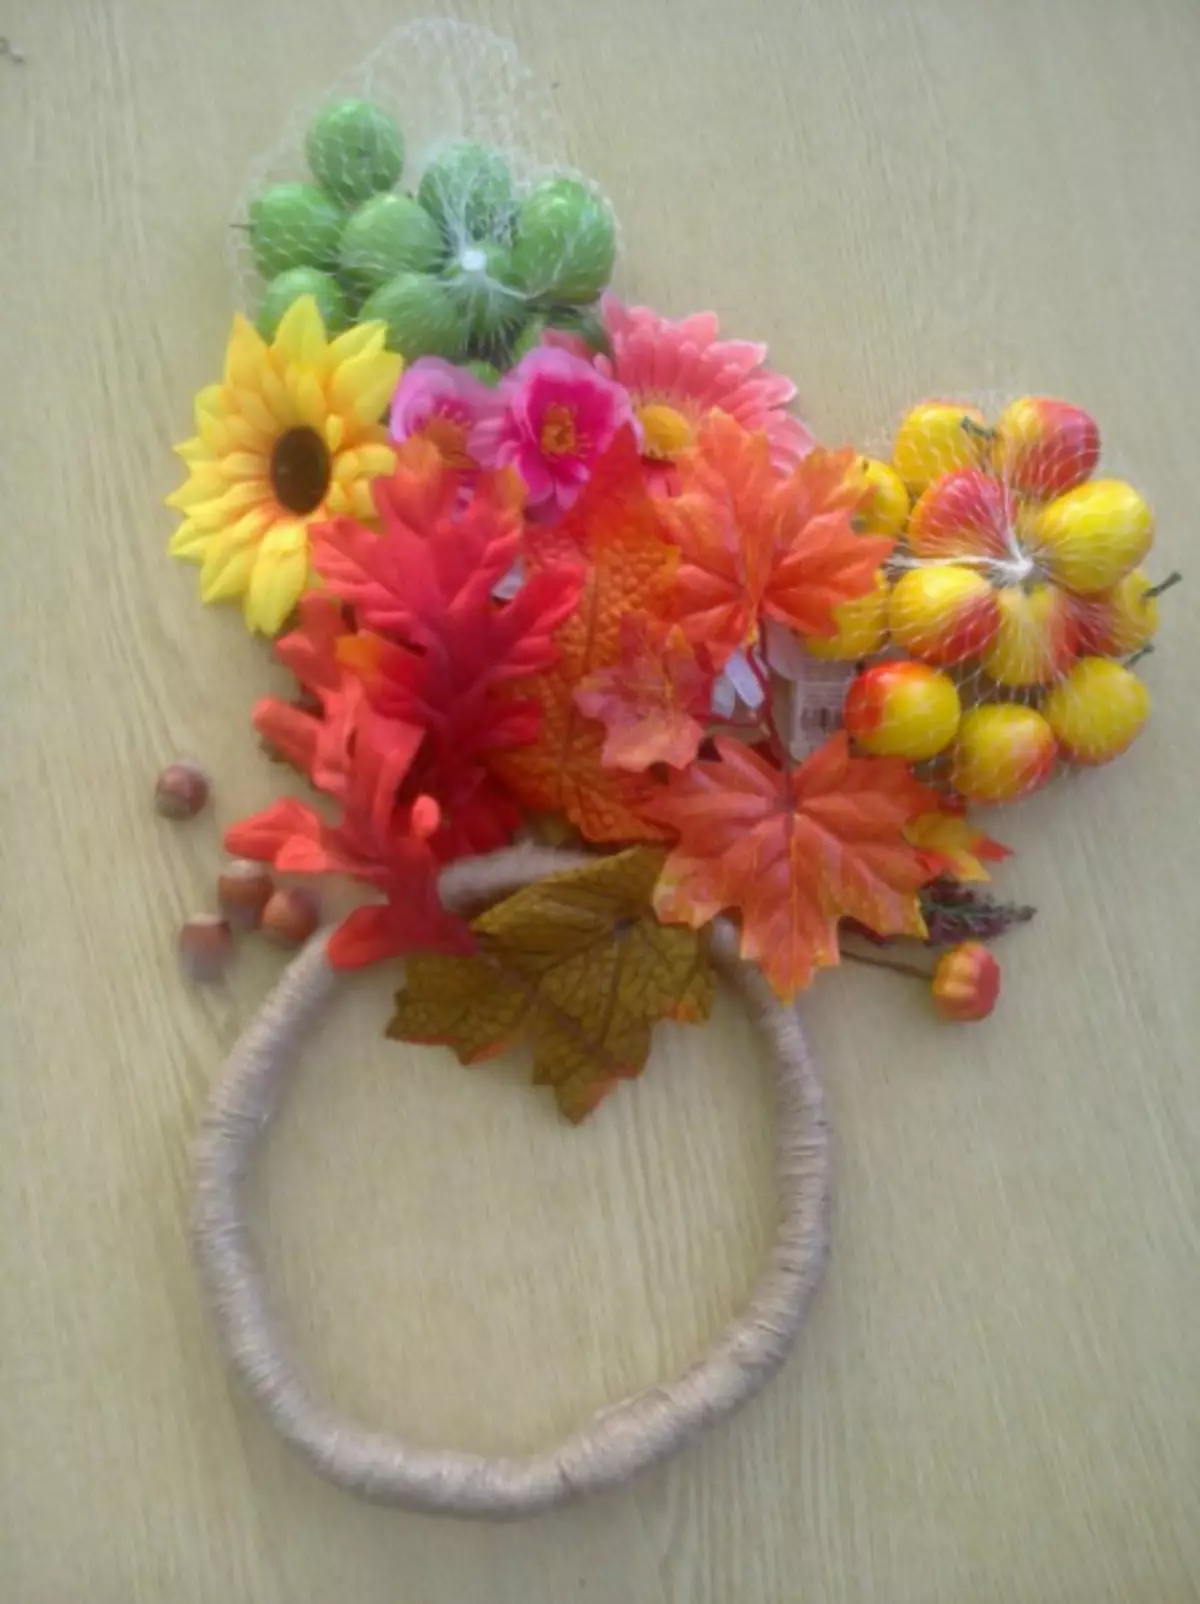 Karangan bunga musim gugur di kepala bahan alami dengan tangan mereka sendiri